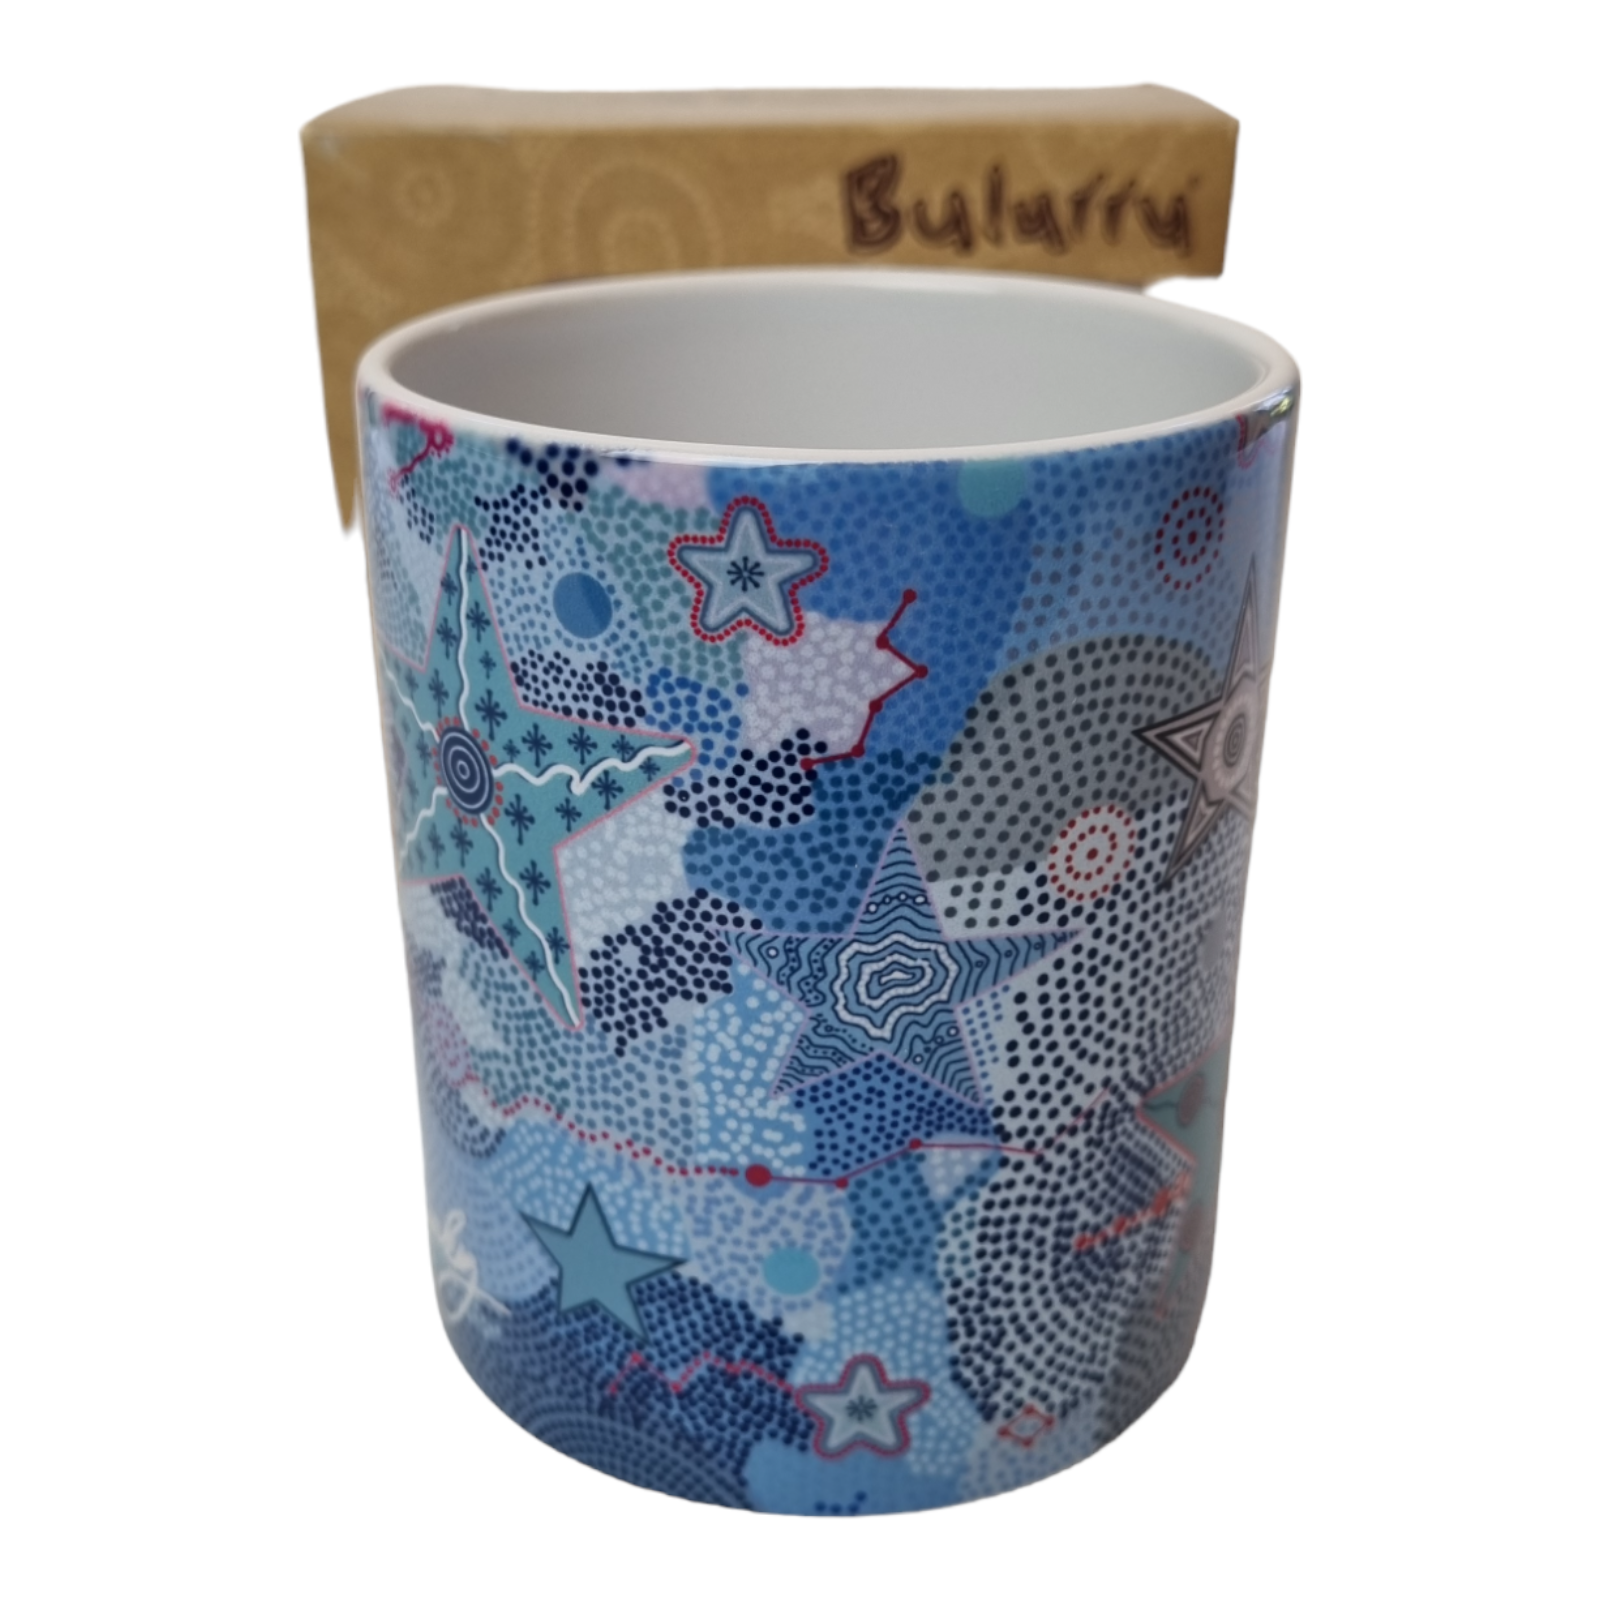 Aboriginal Coffee Mug in Gift Box Indigenous Artist Bulurru Cup DREAMTIME STARS